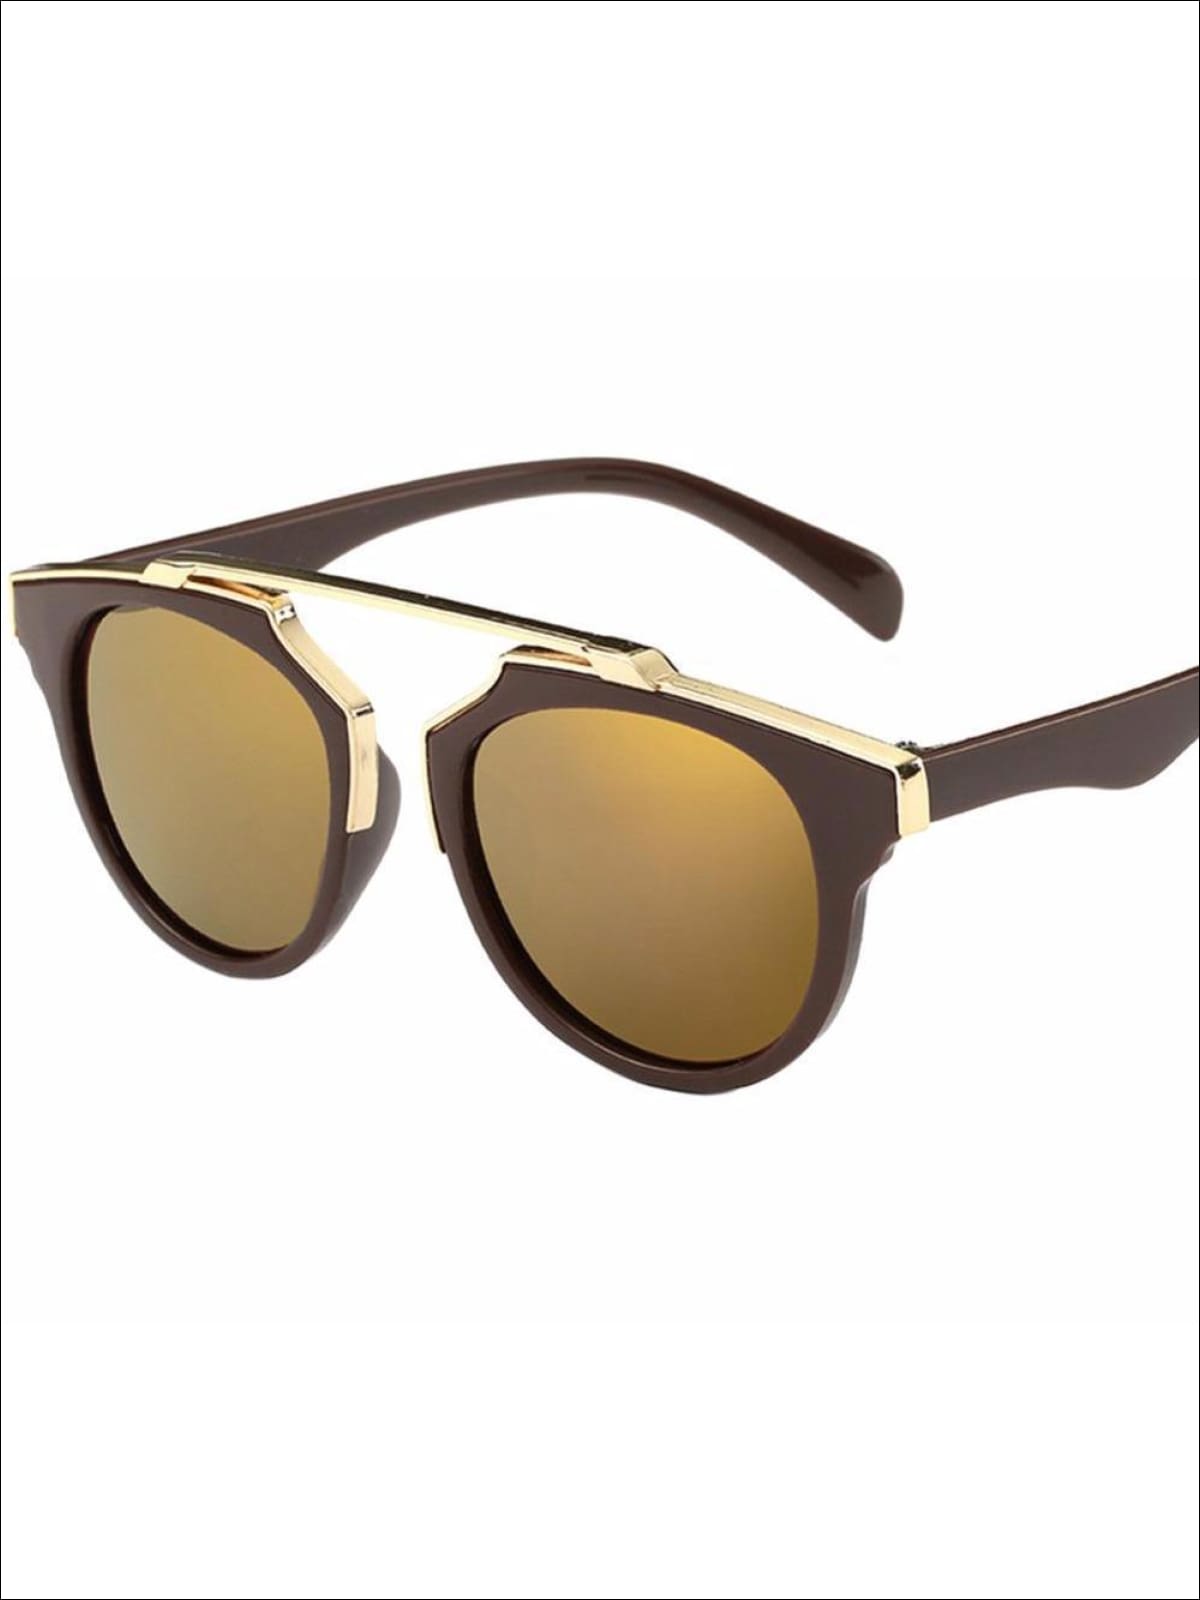 Girls Round Aviator Sunglasses with Gold Detail - Brown / One - Girls Sunglasses